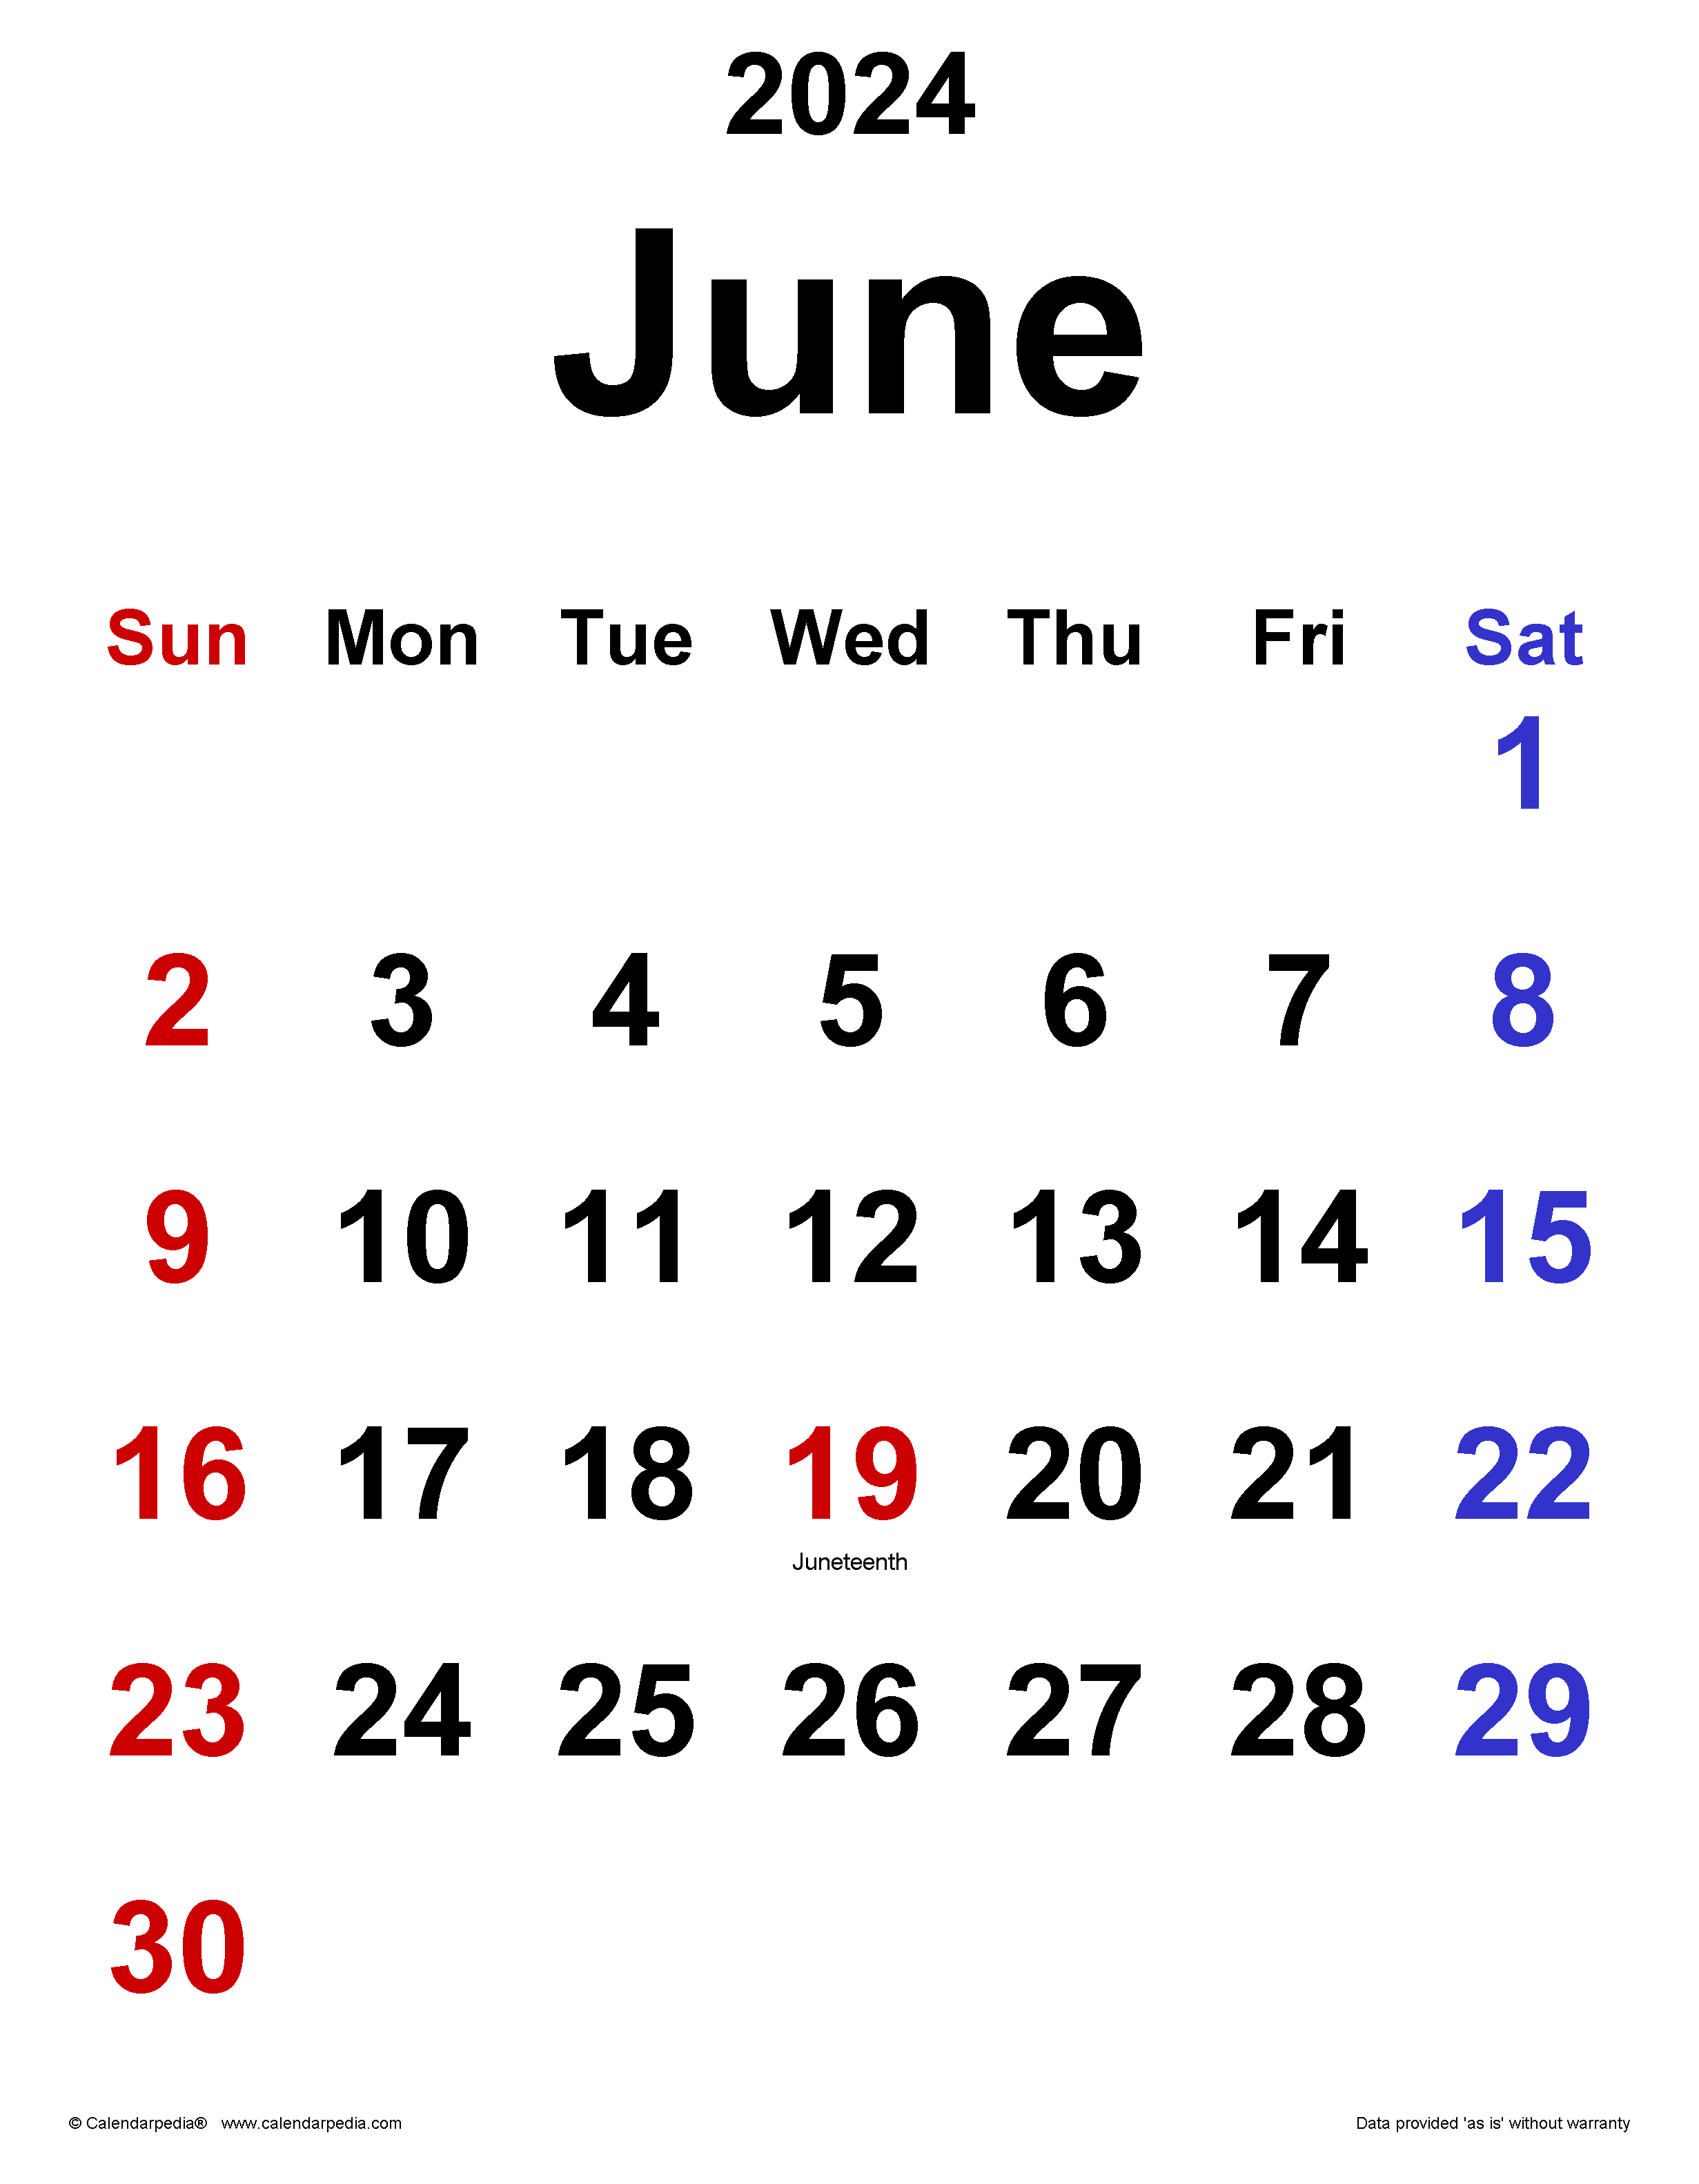 Calendar June 2024 Excel Easy To Use Calendar App 2024 - Free Printable 2024 Calendar With Holidays June